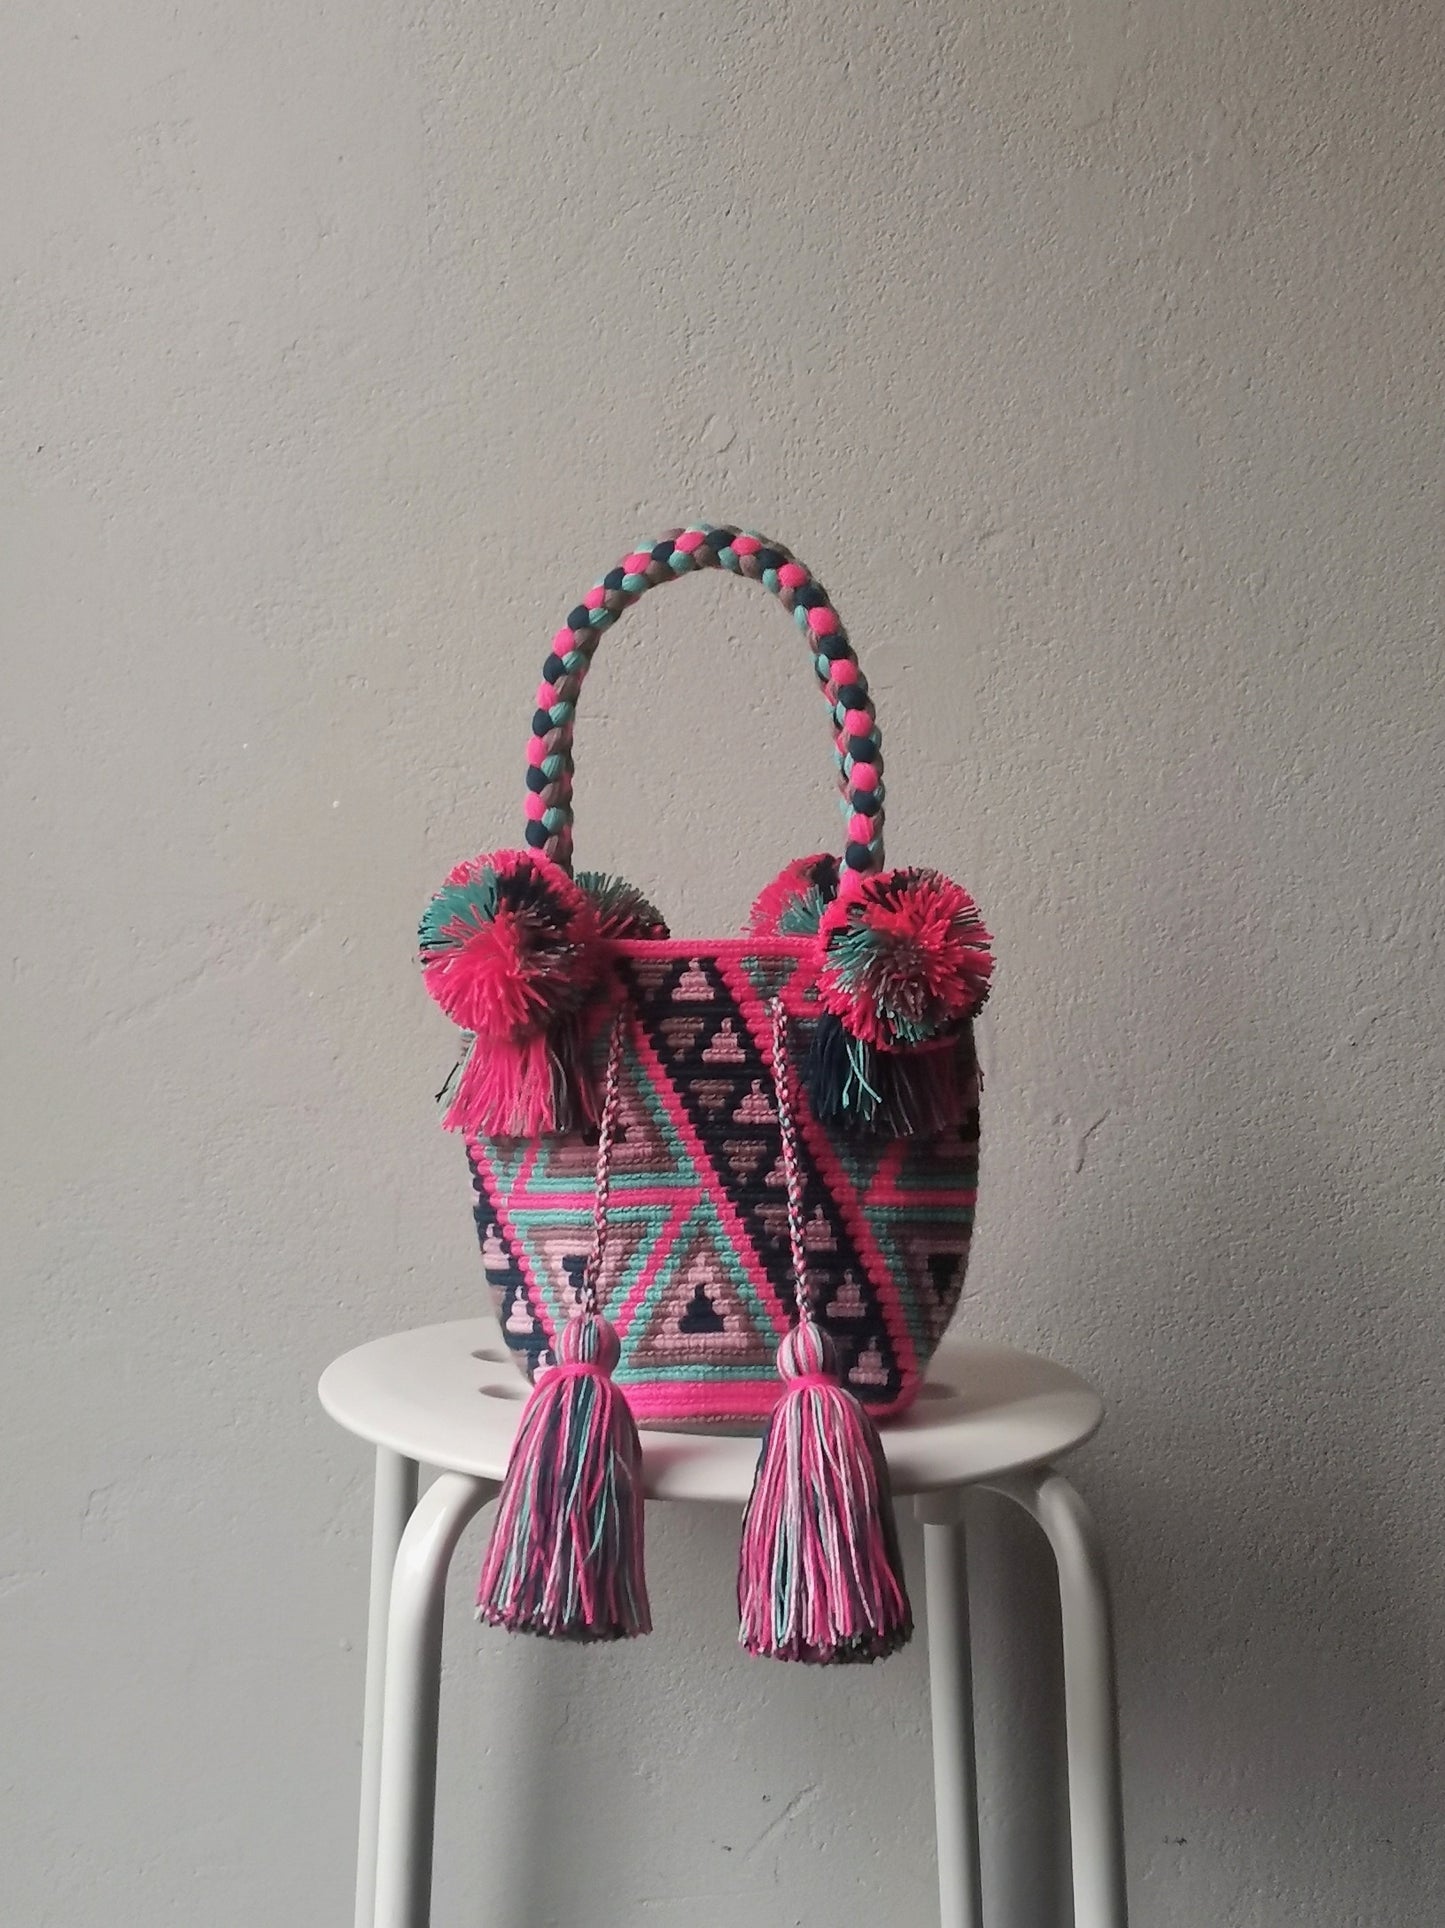 Pink and blue S mochila handbag